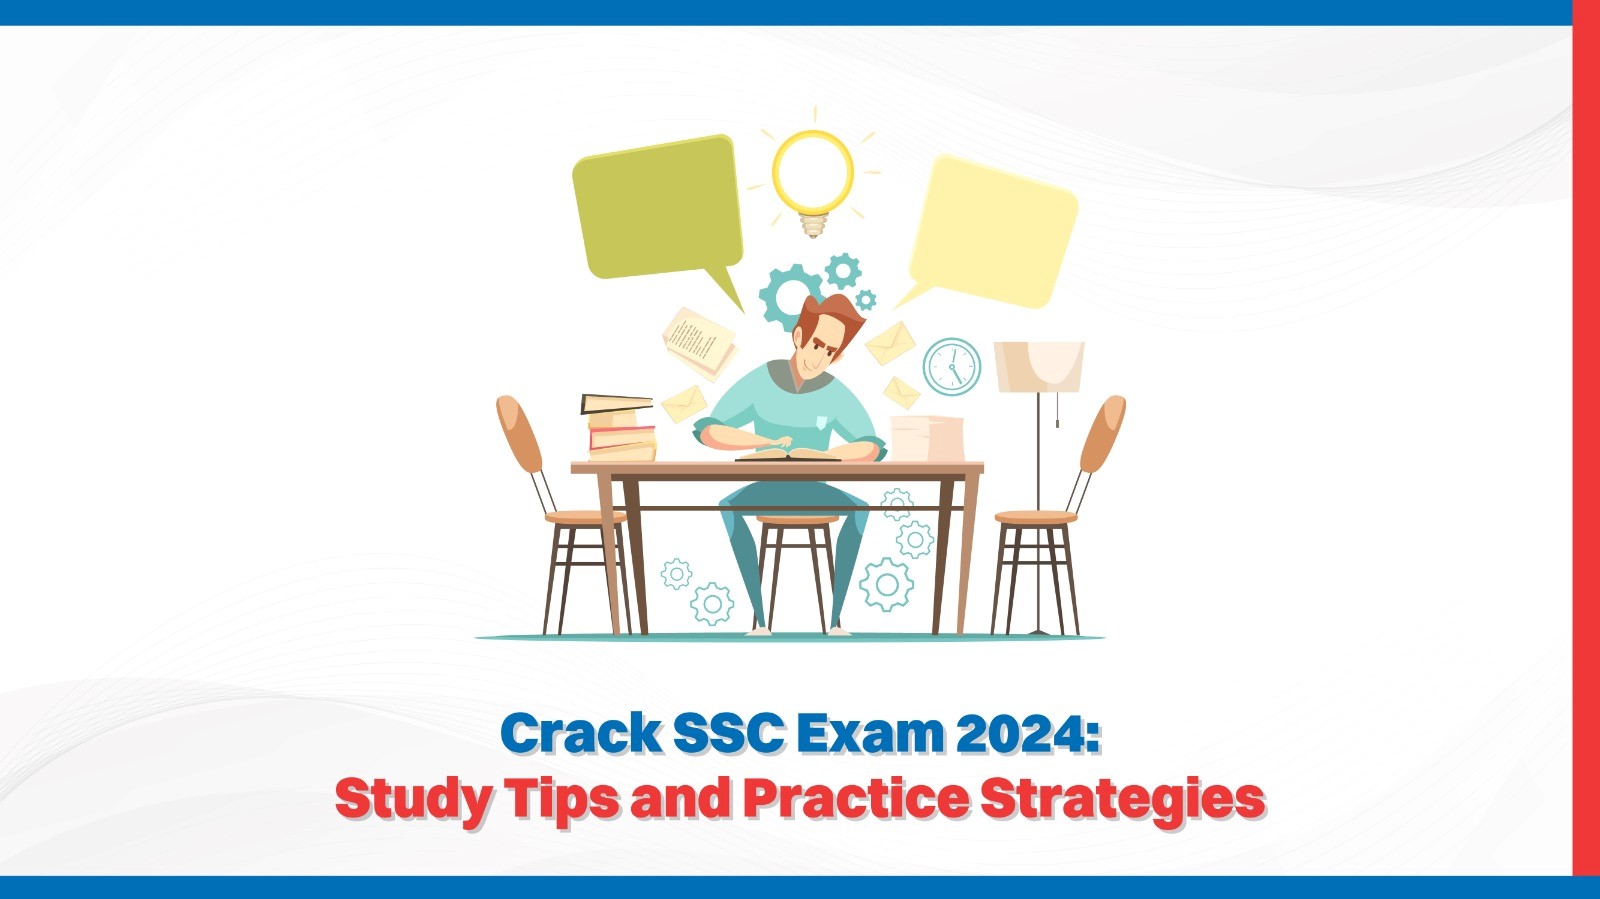 Crack SSC Exam 2024 Study Tips and Practice Strategies.jpg